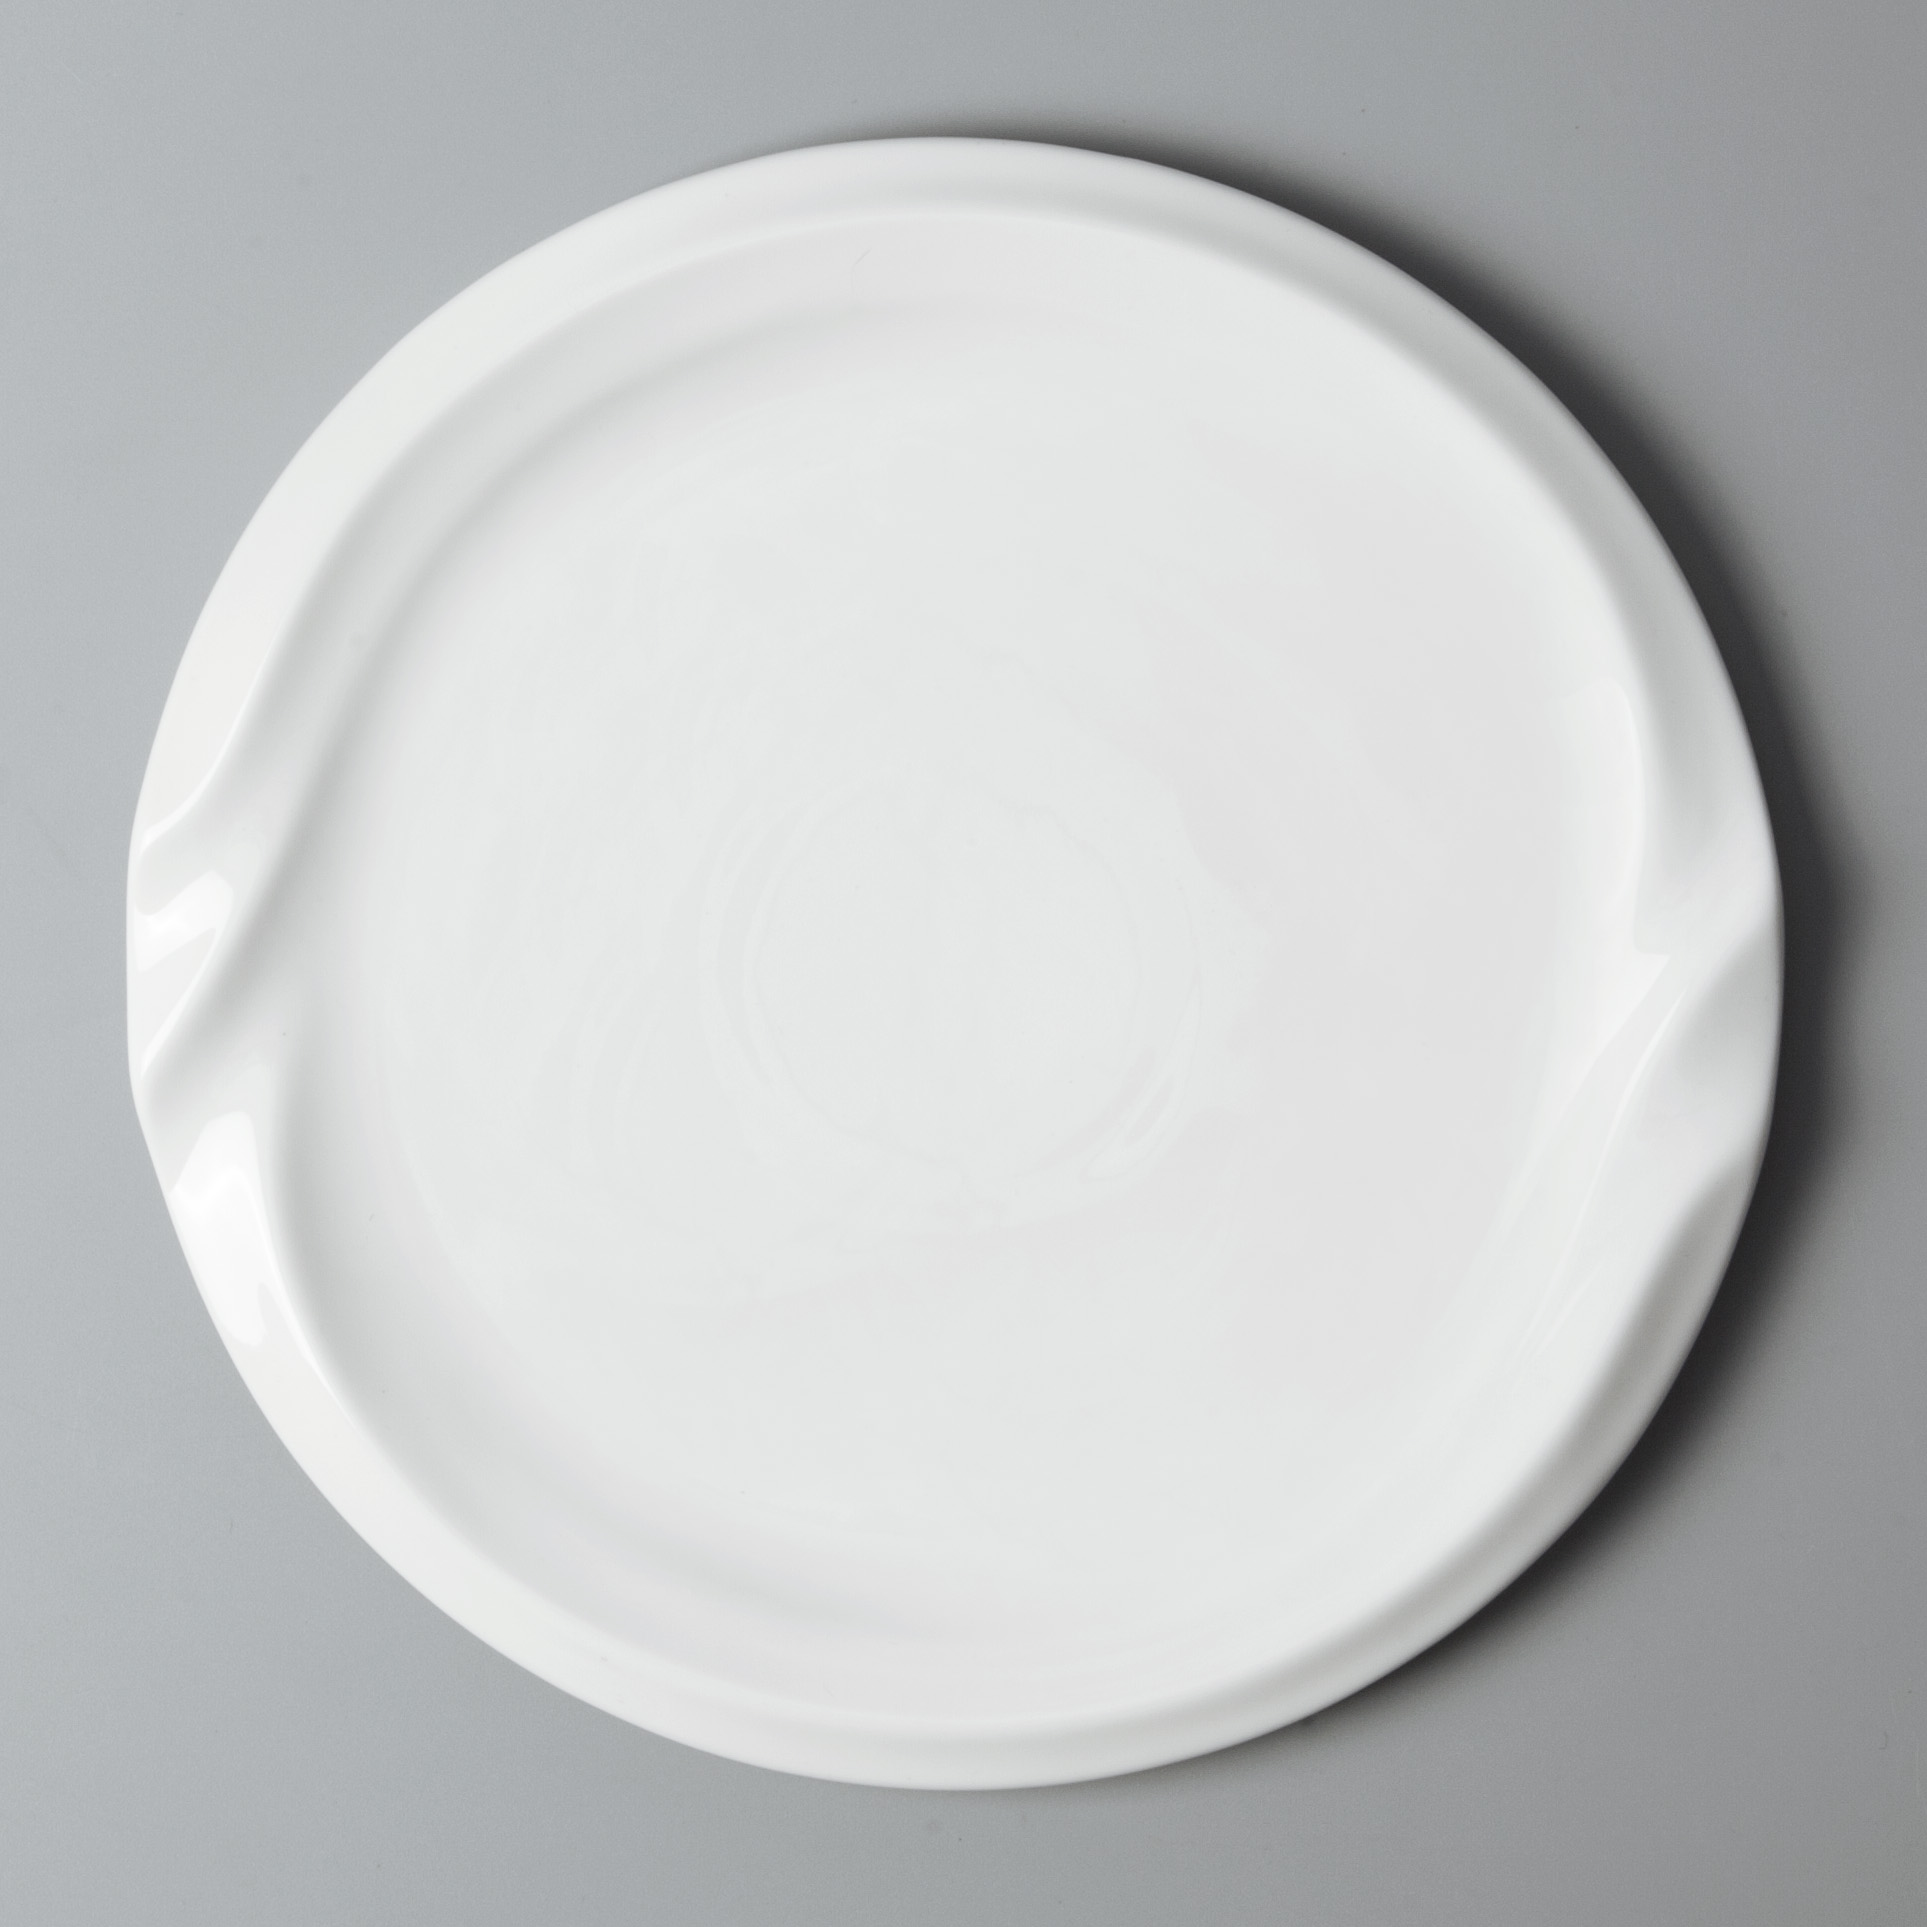 rim white plate set series for hotel-11